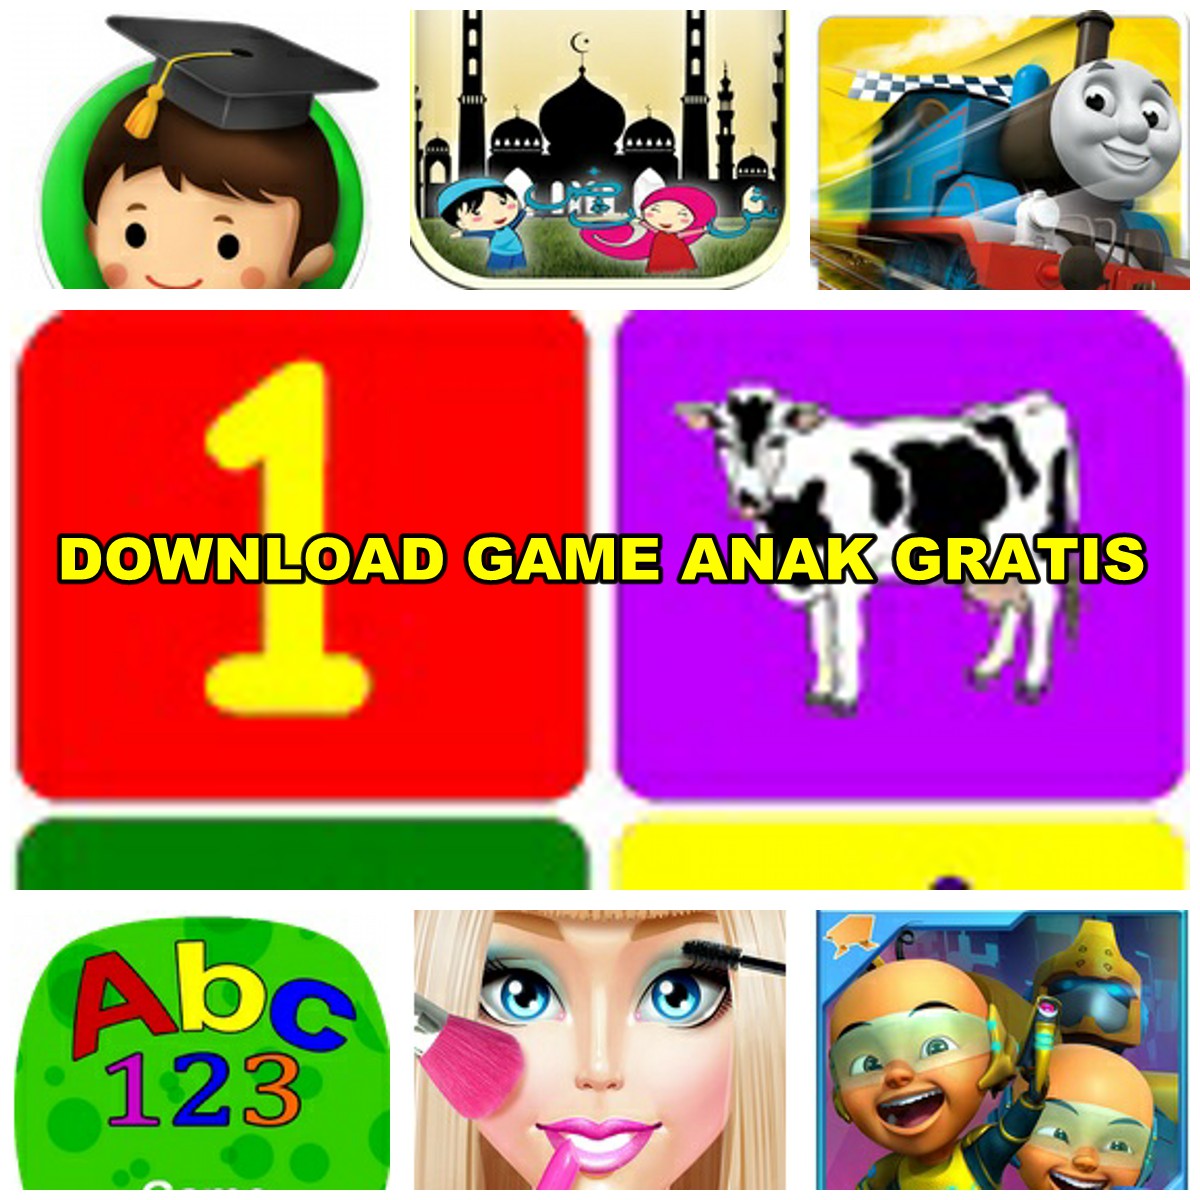 Download Game Anak GRATIS for Android - ALAMSEMESTA19 ...